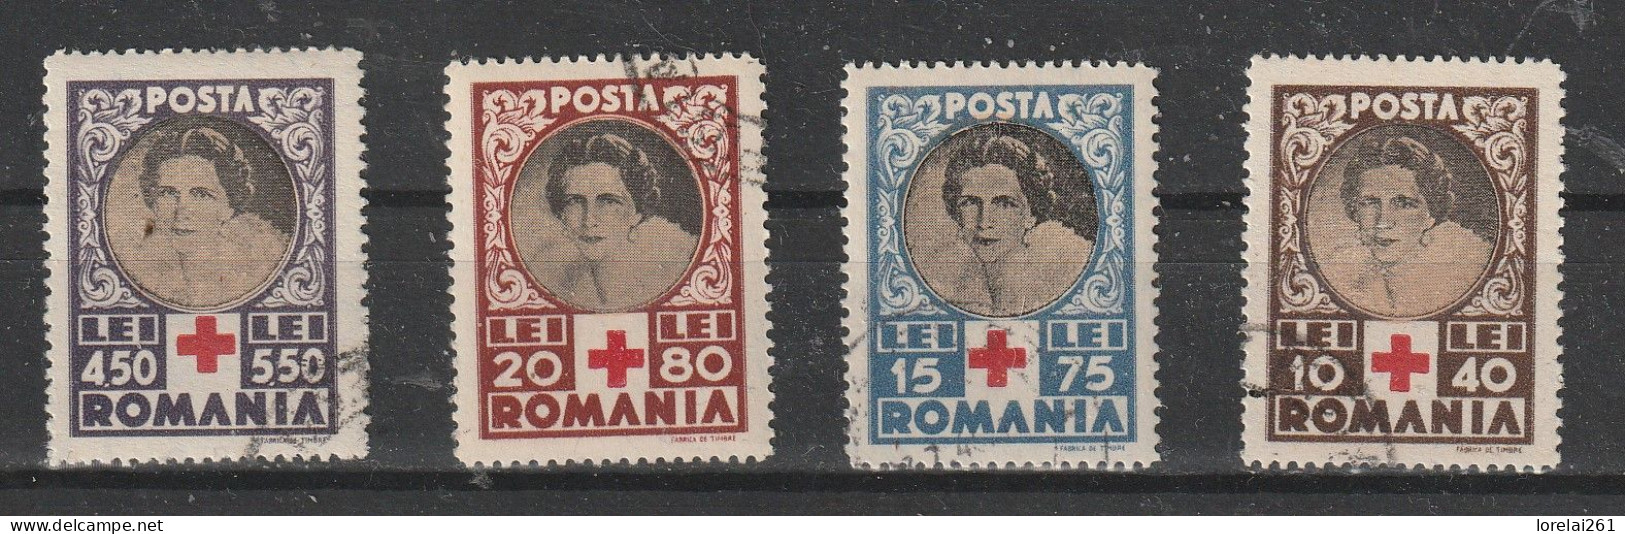 1945 - Croix Rouge/Reine Elena Mi No 827/830 - Usado